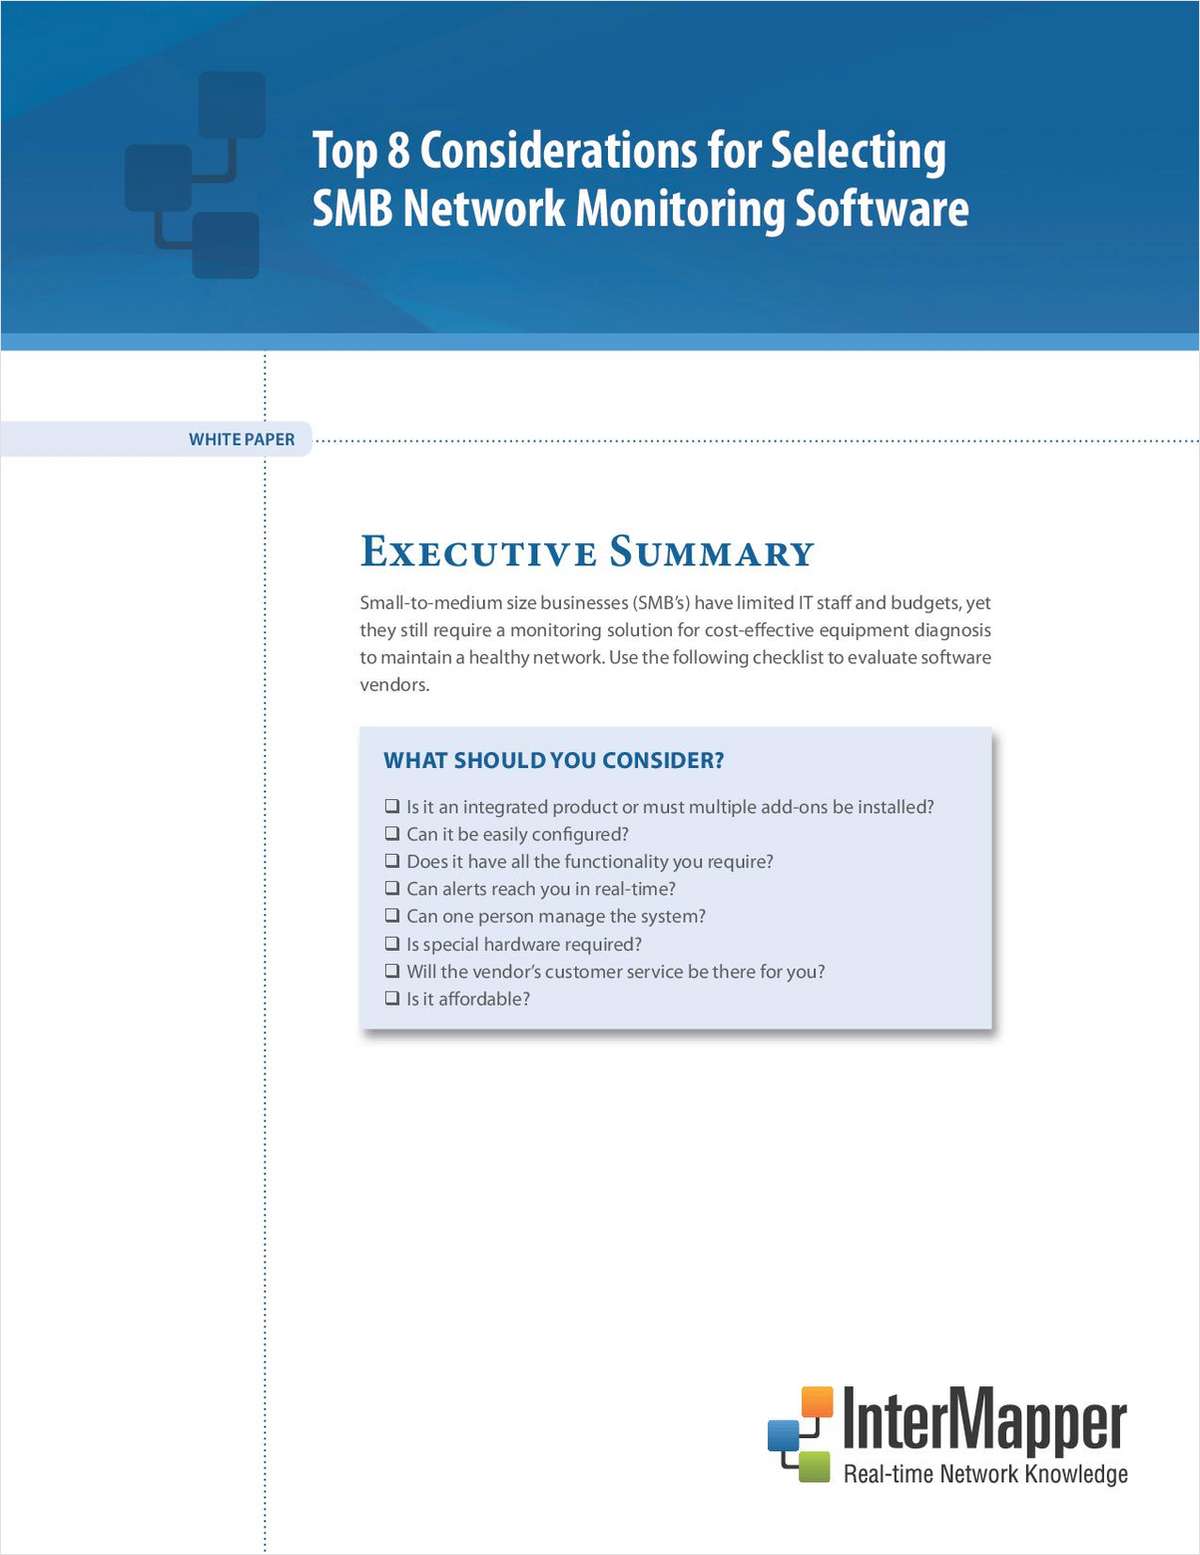 Top 8 Considerations for Selecting SMB Network Monitoring Software